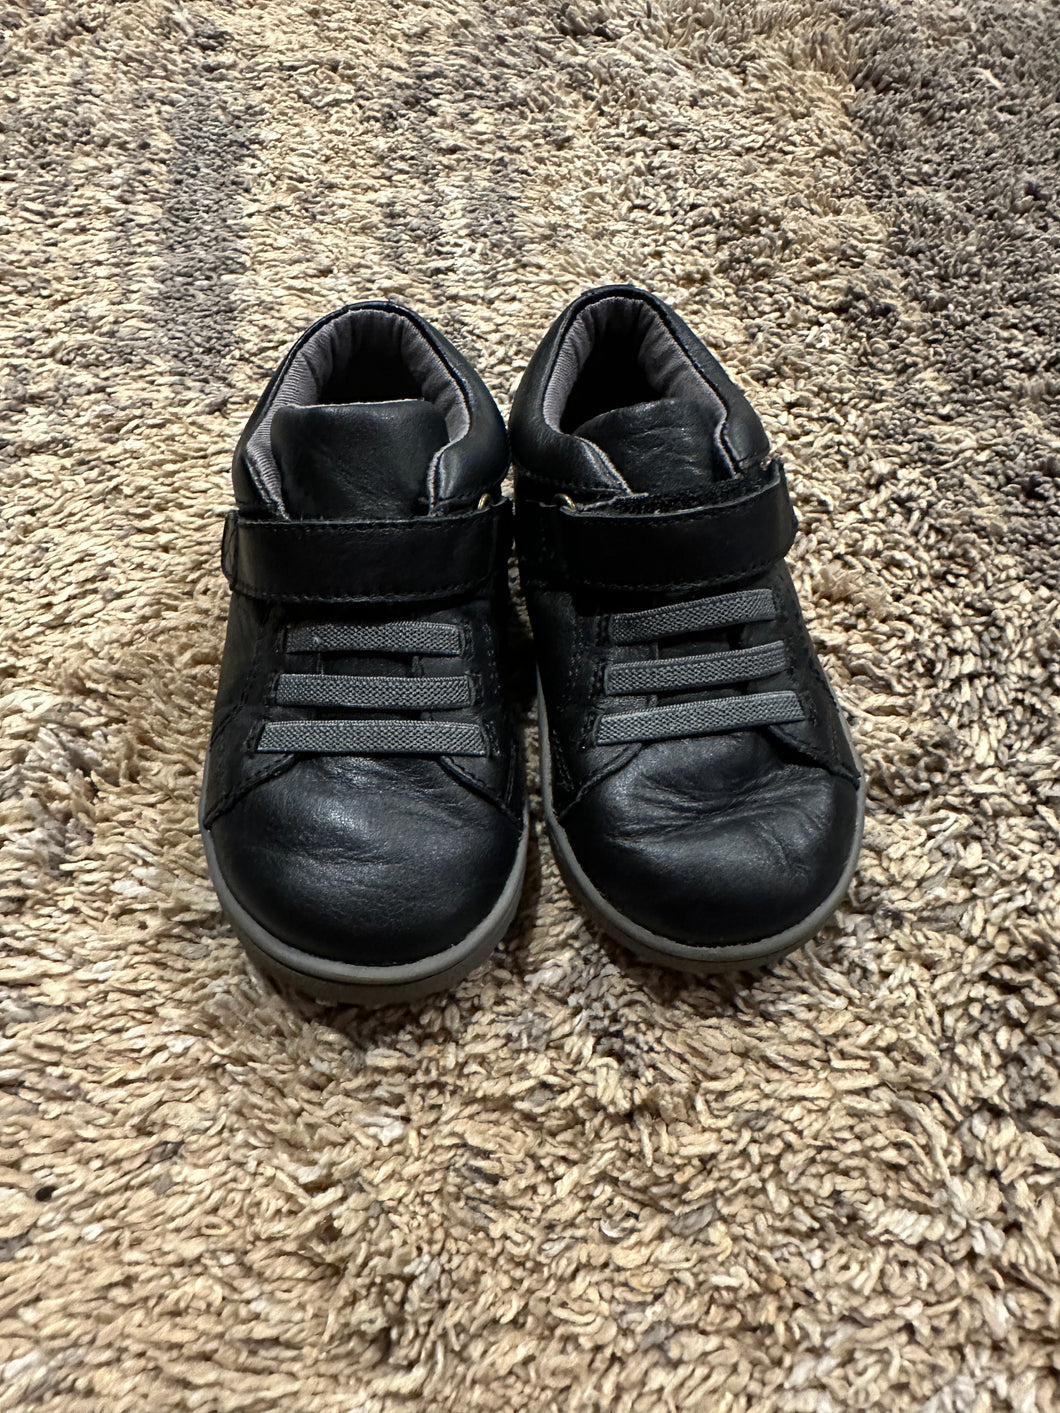 ETV - Toddler Boy Size 5 Black Shoes - Soles in Excellent Condition 5